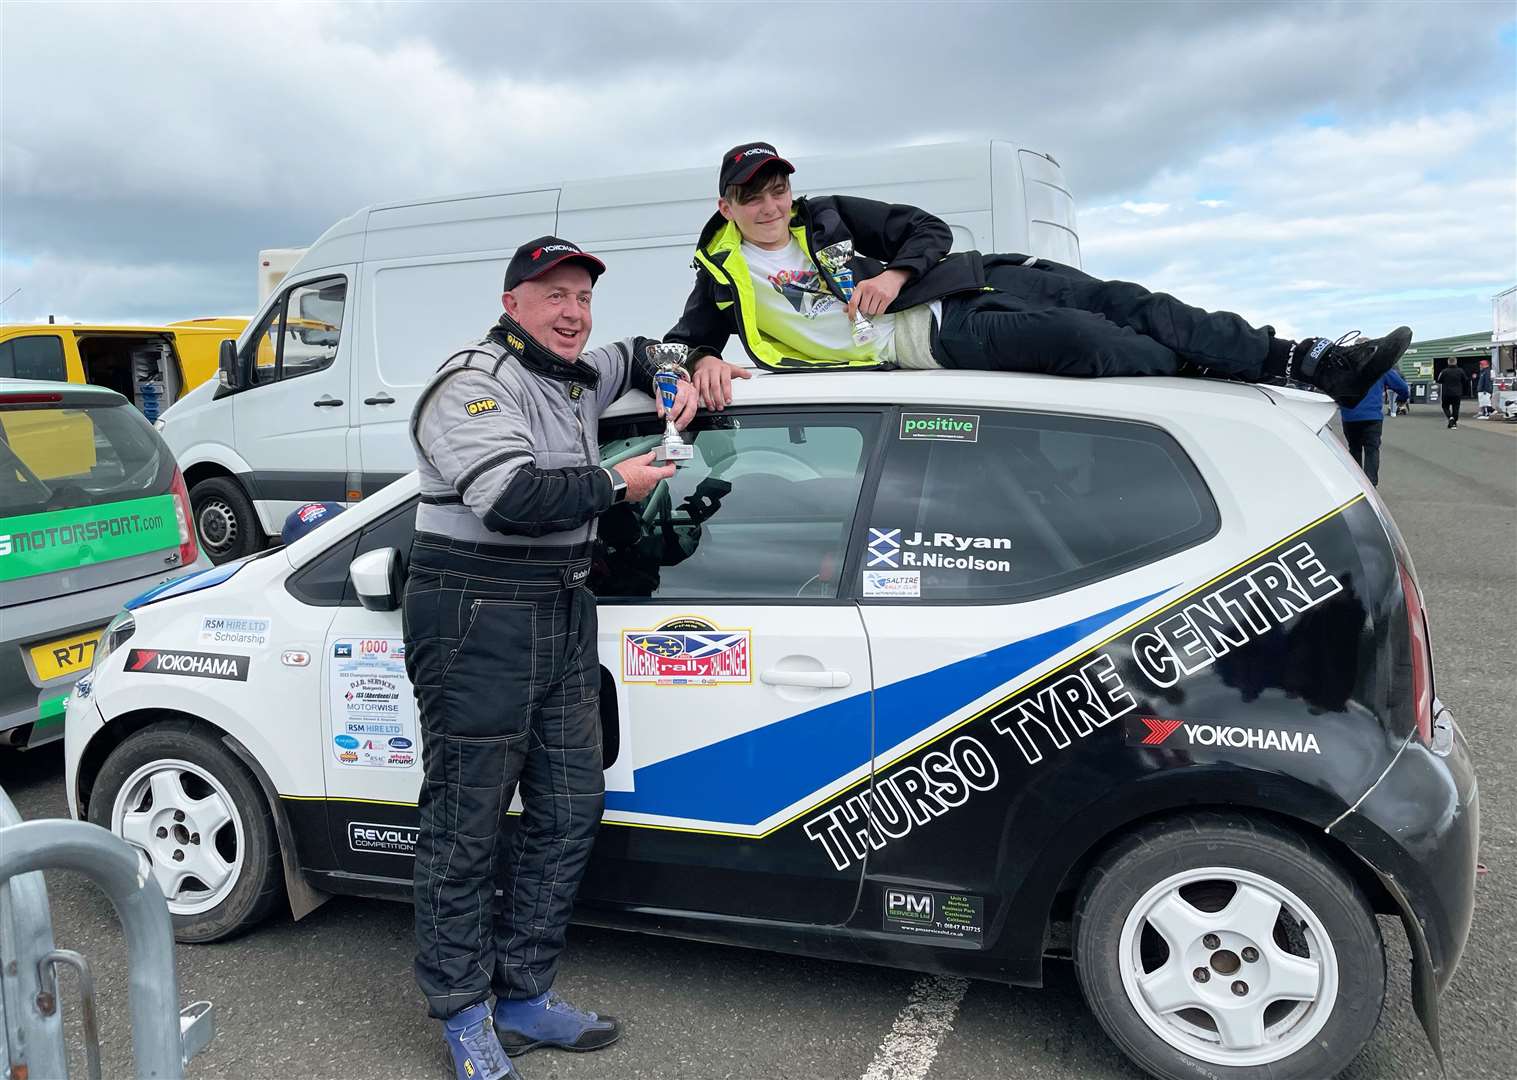 Jack Ryan and navigator Robin Nicolson after the McRae Rally Challenge event.